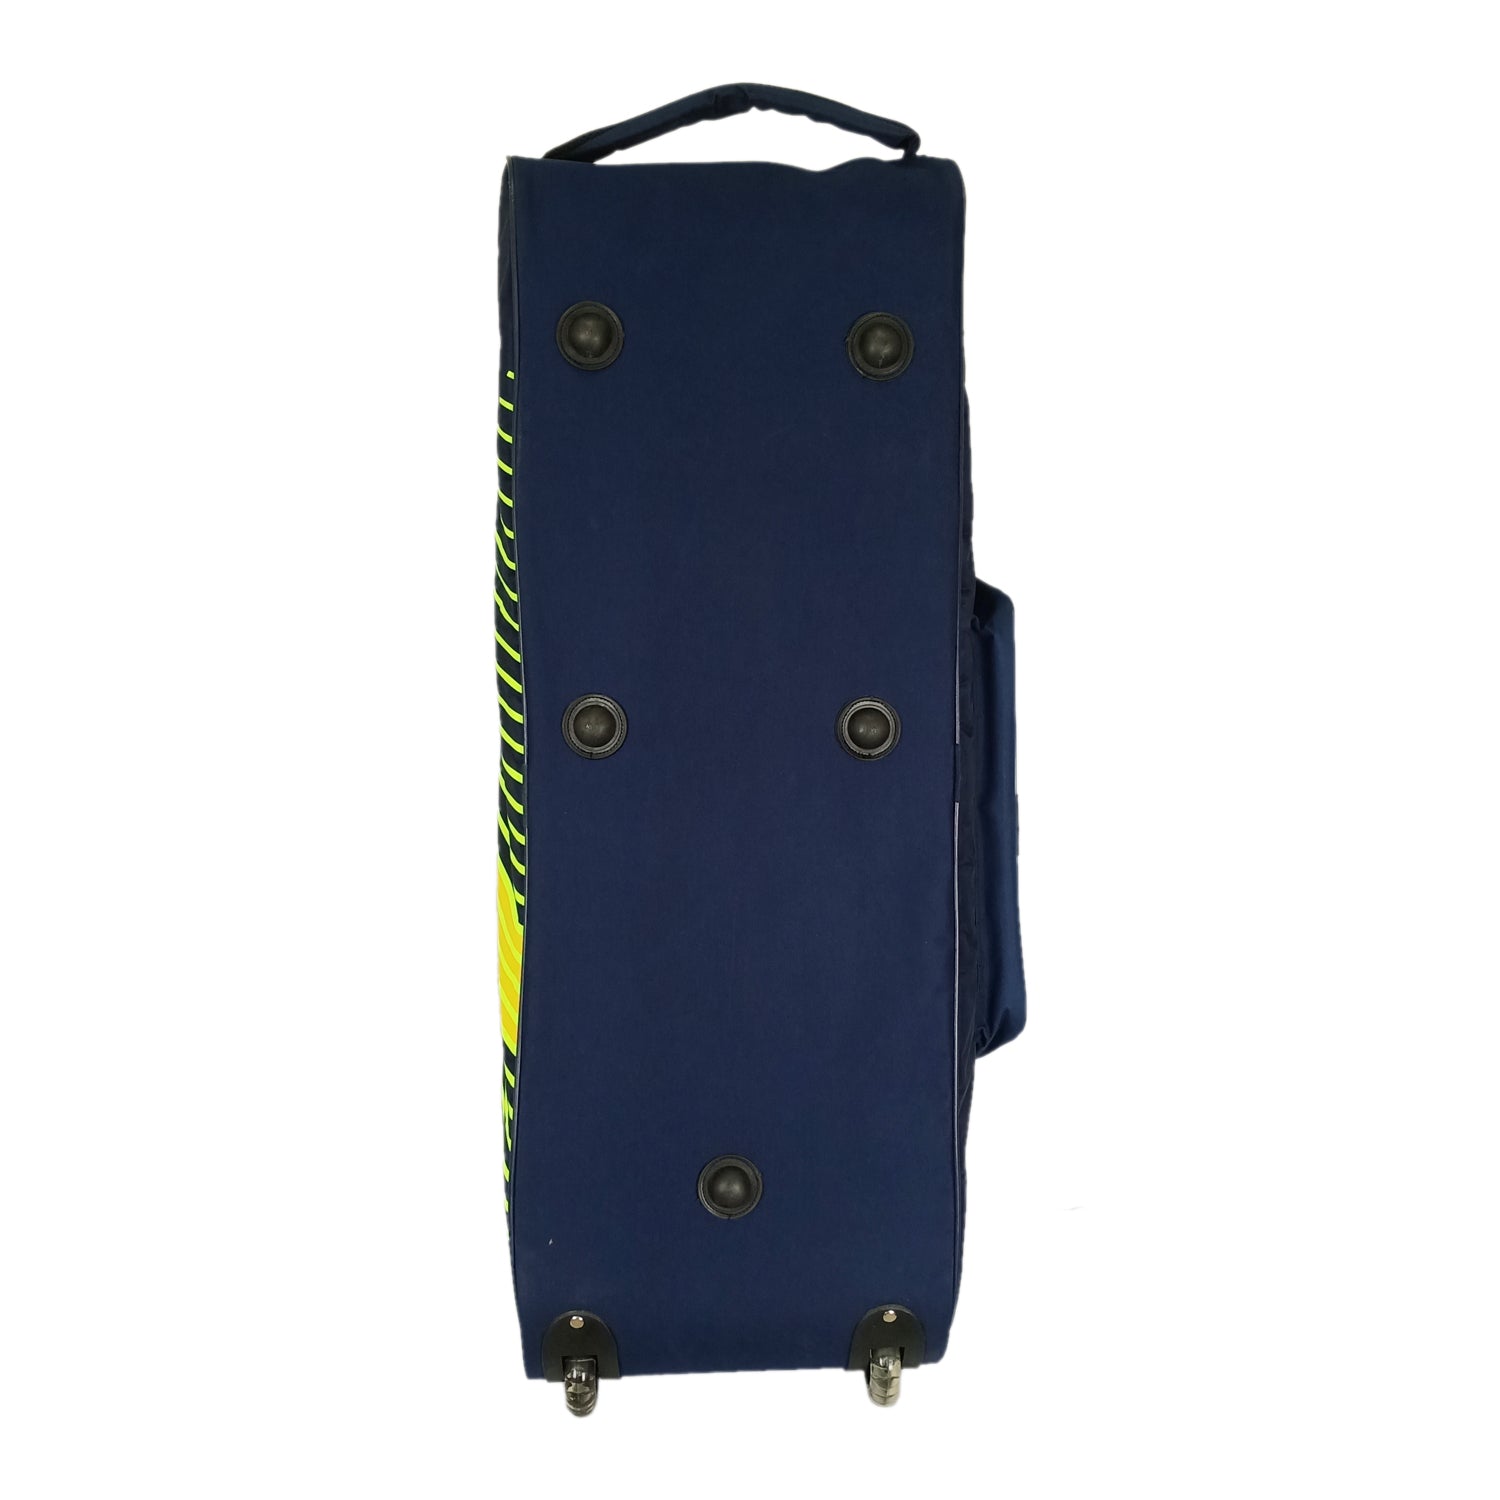 SG Smartpak 1.0 Wheelie Cricket Kit Bag - Best Price online Prokicksports.com